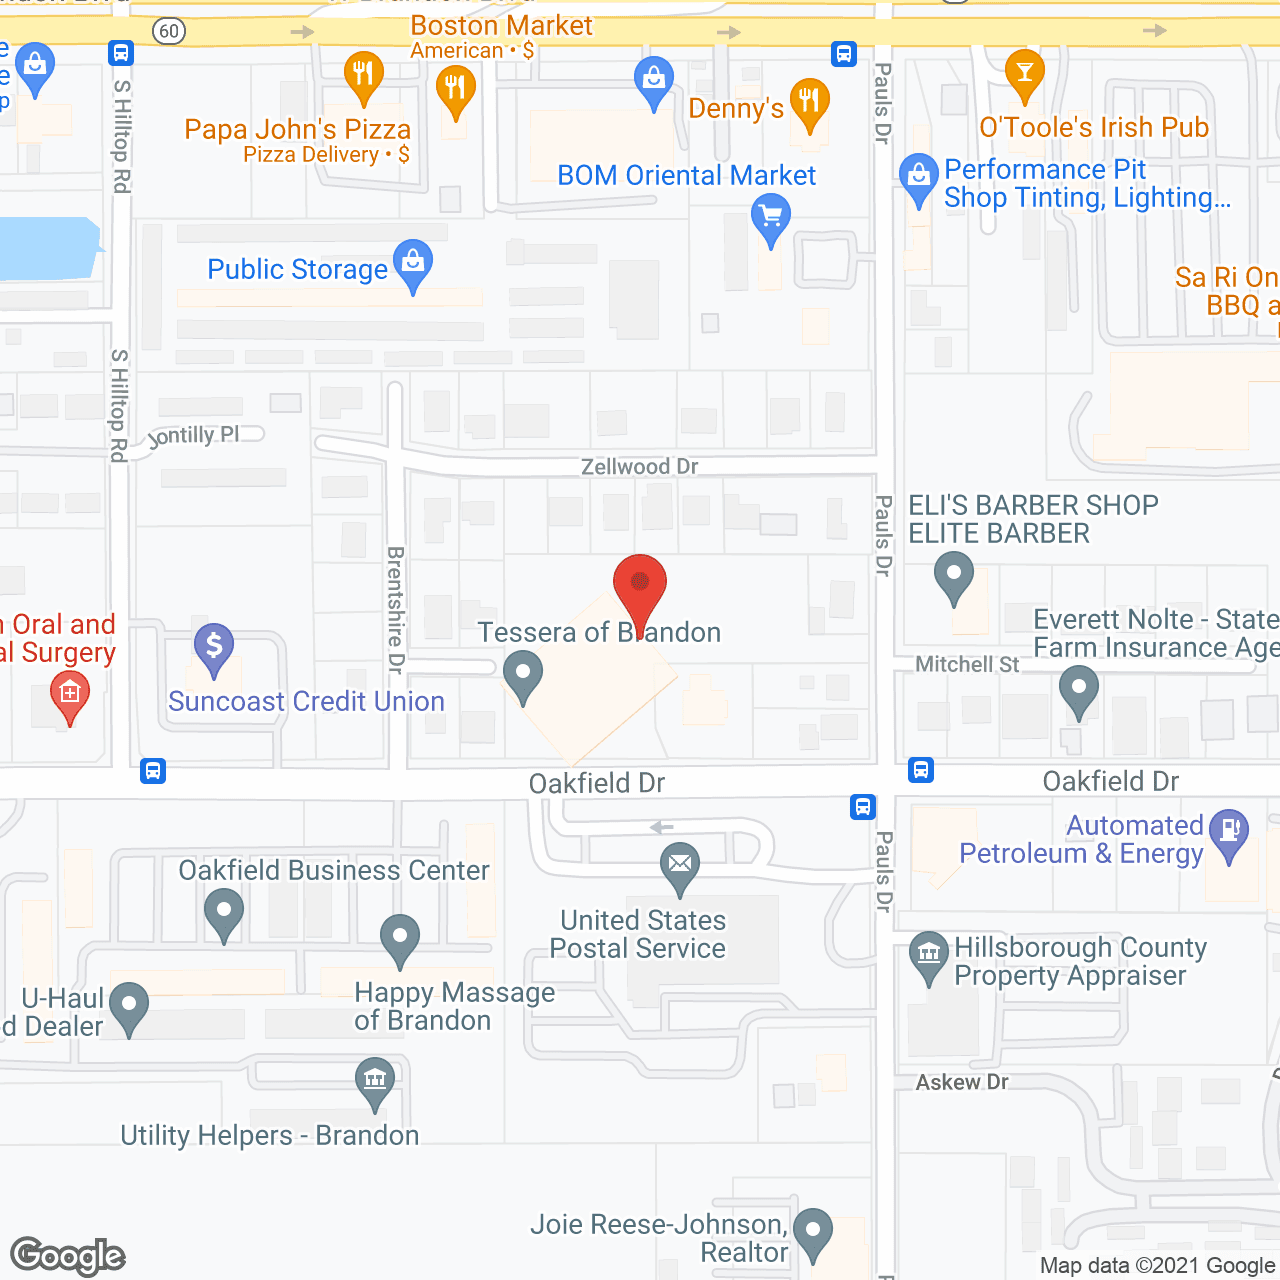 Tessera of Brandon in google map